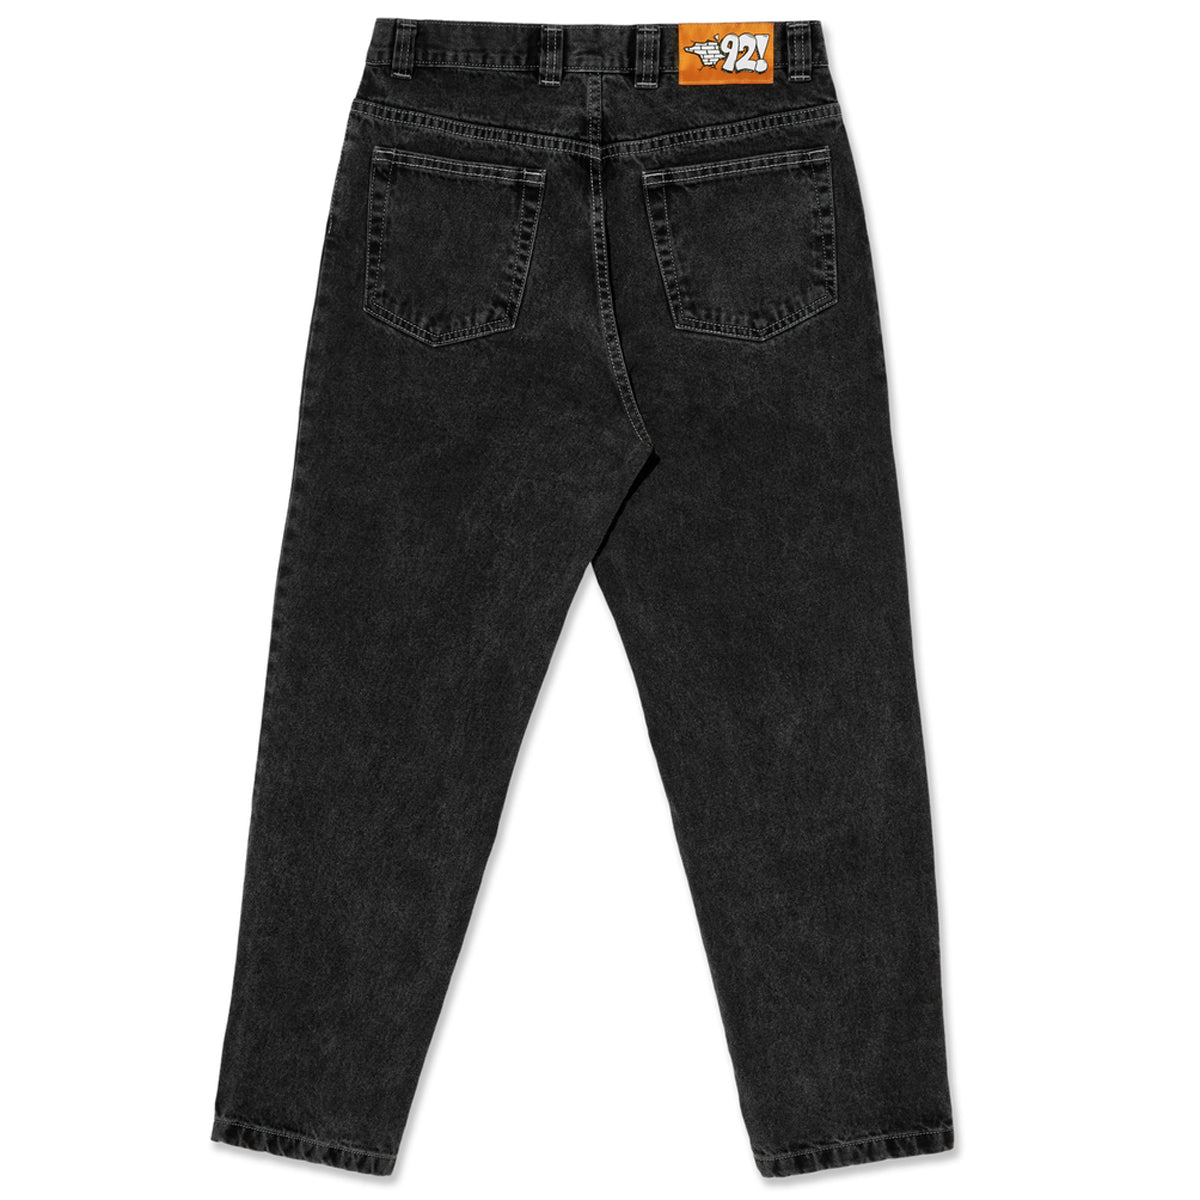 Polar 92! Denim Jeans - Silver Black, – Daddies Board Shop